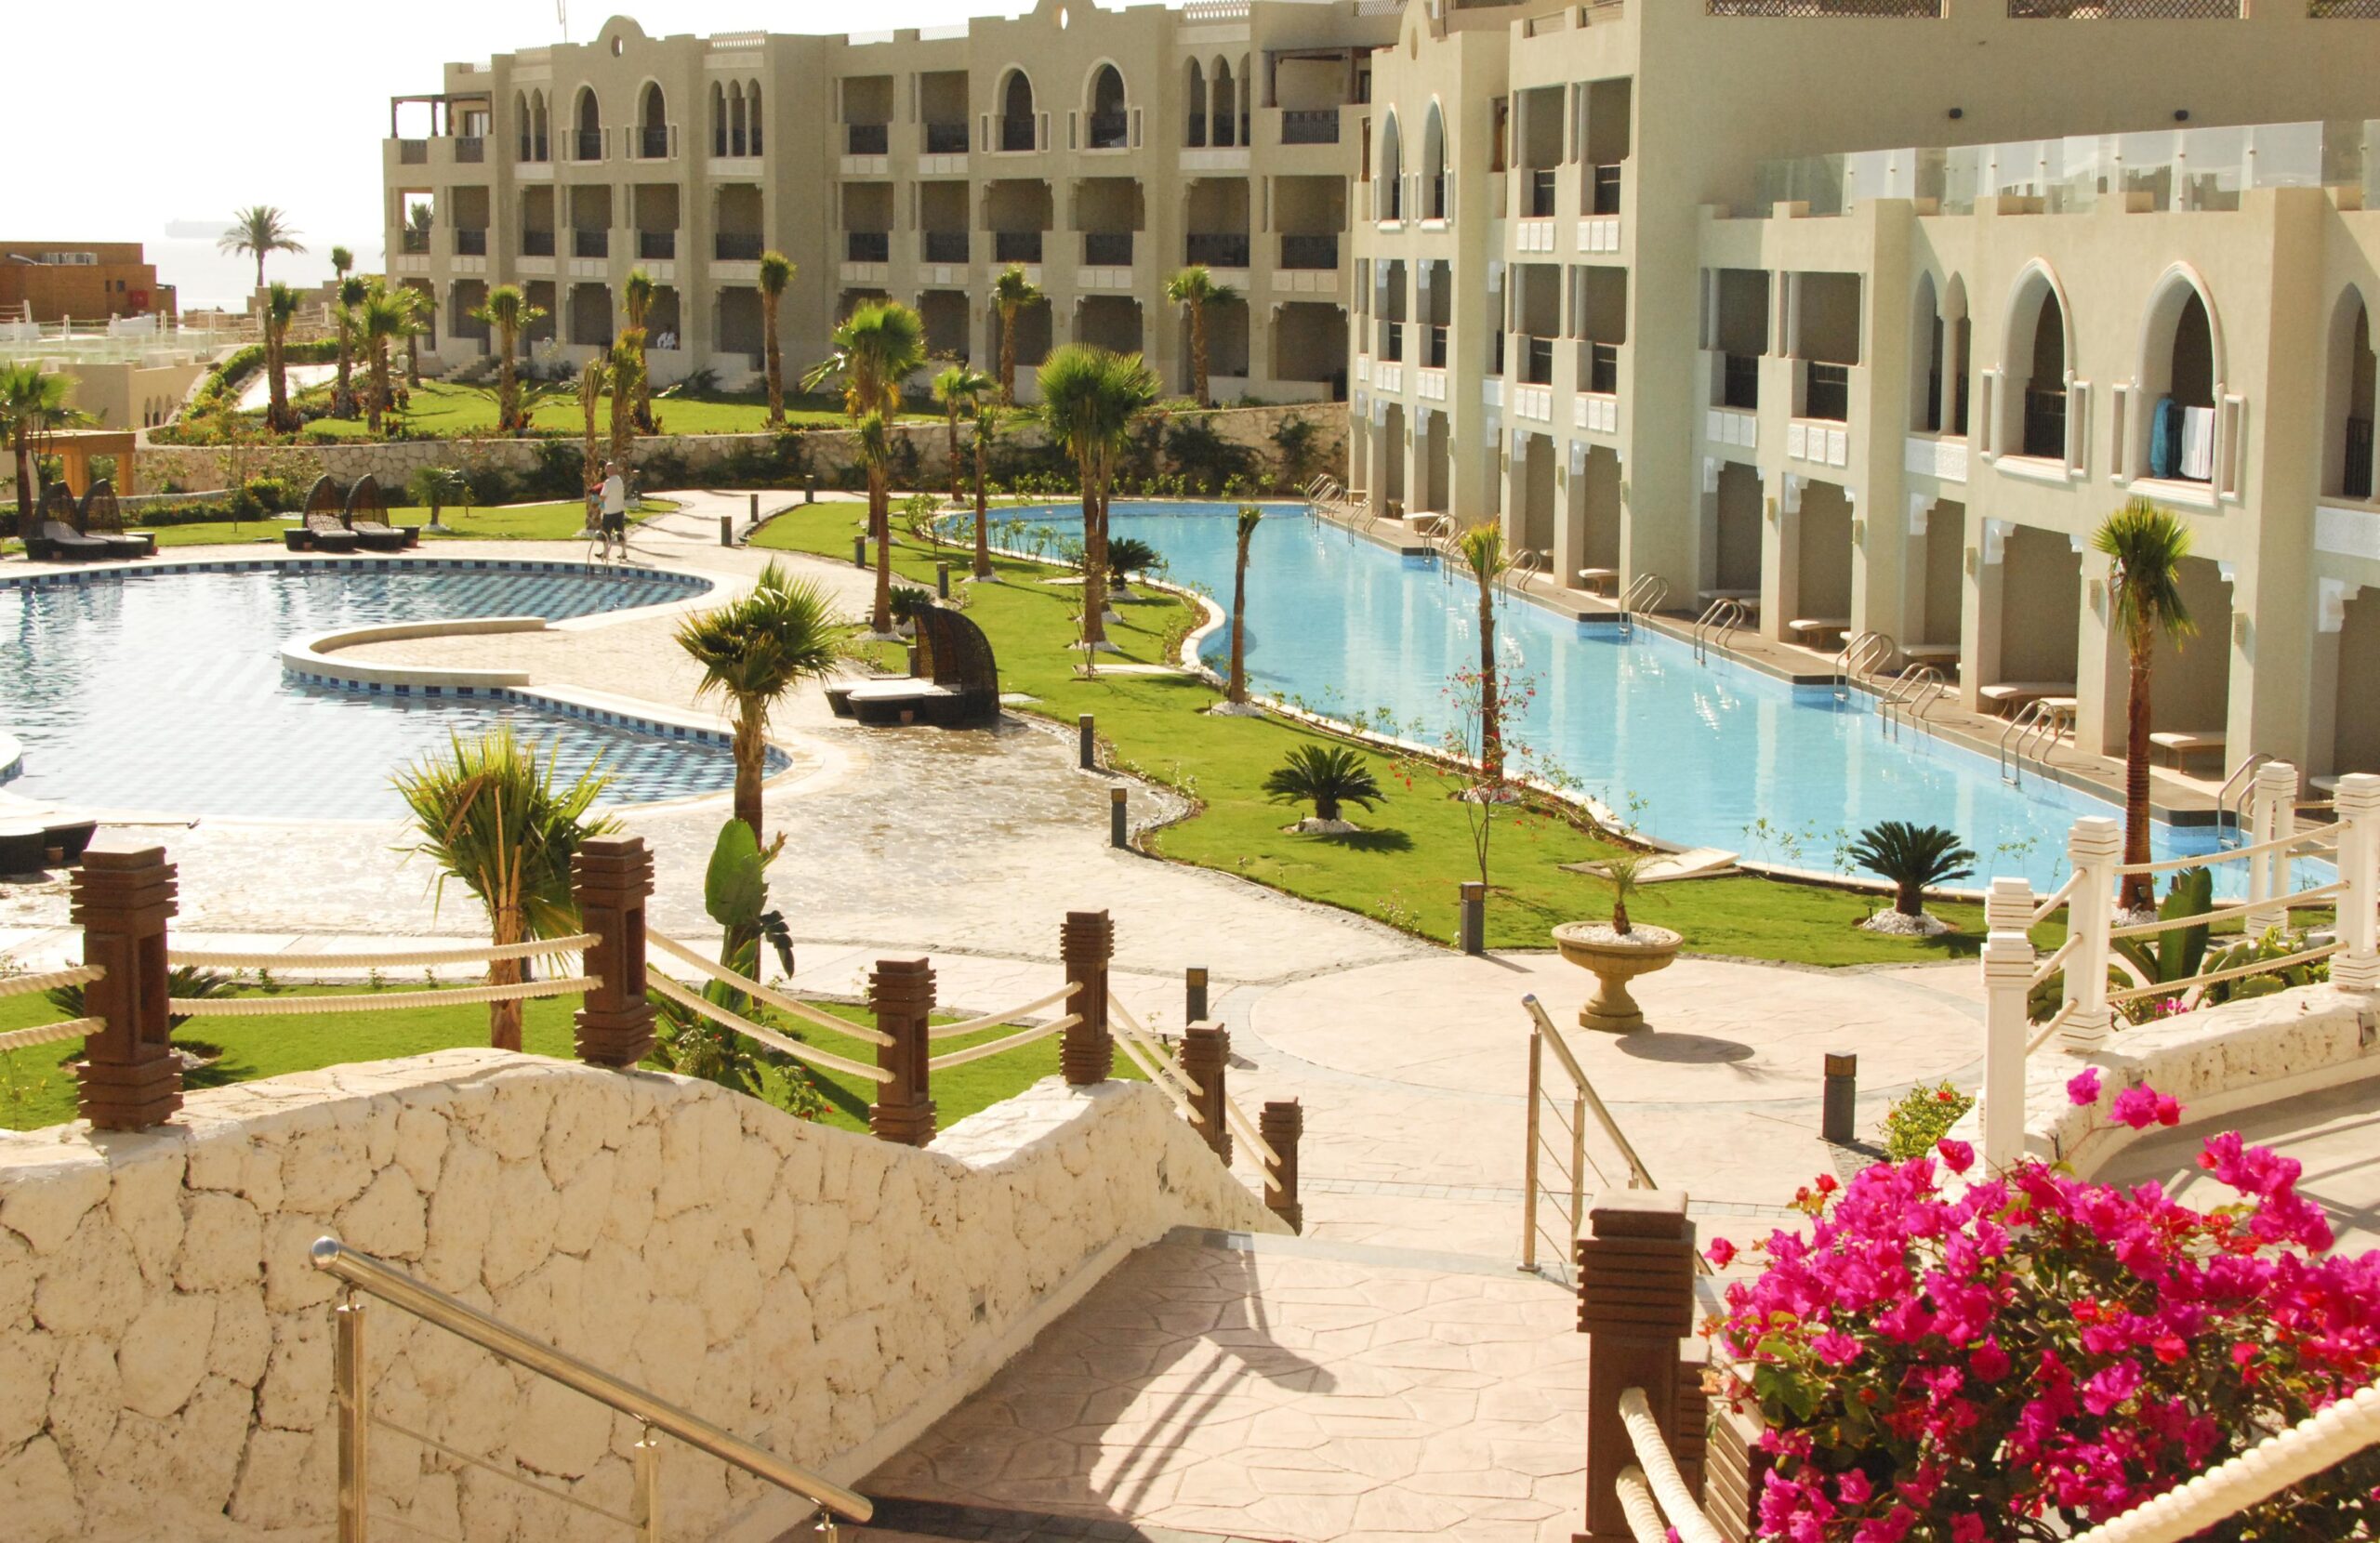 Санрайз арабиан бич резорт шарм. Sunrise Arabian Beach Resort - Grand select 5*. Sunrise Arabian Beach бассейн. Sunrise Arabian Beach.